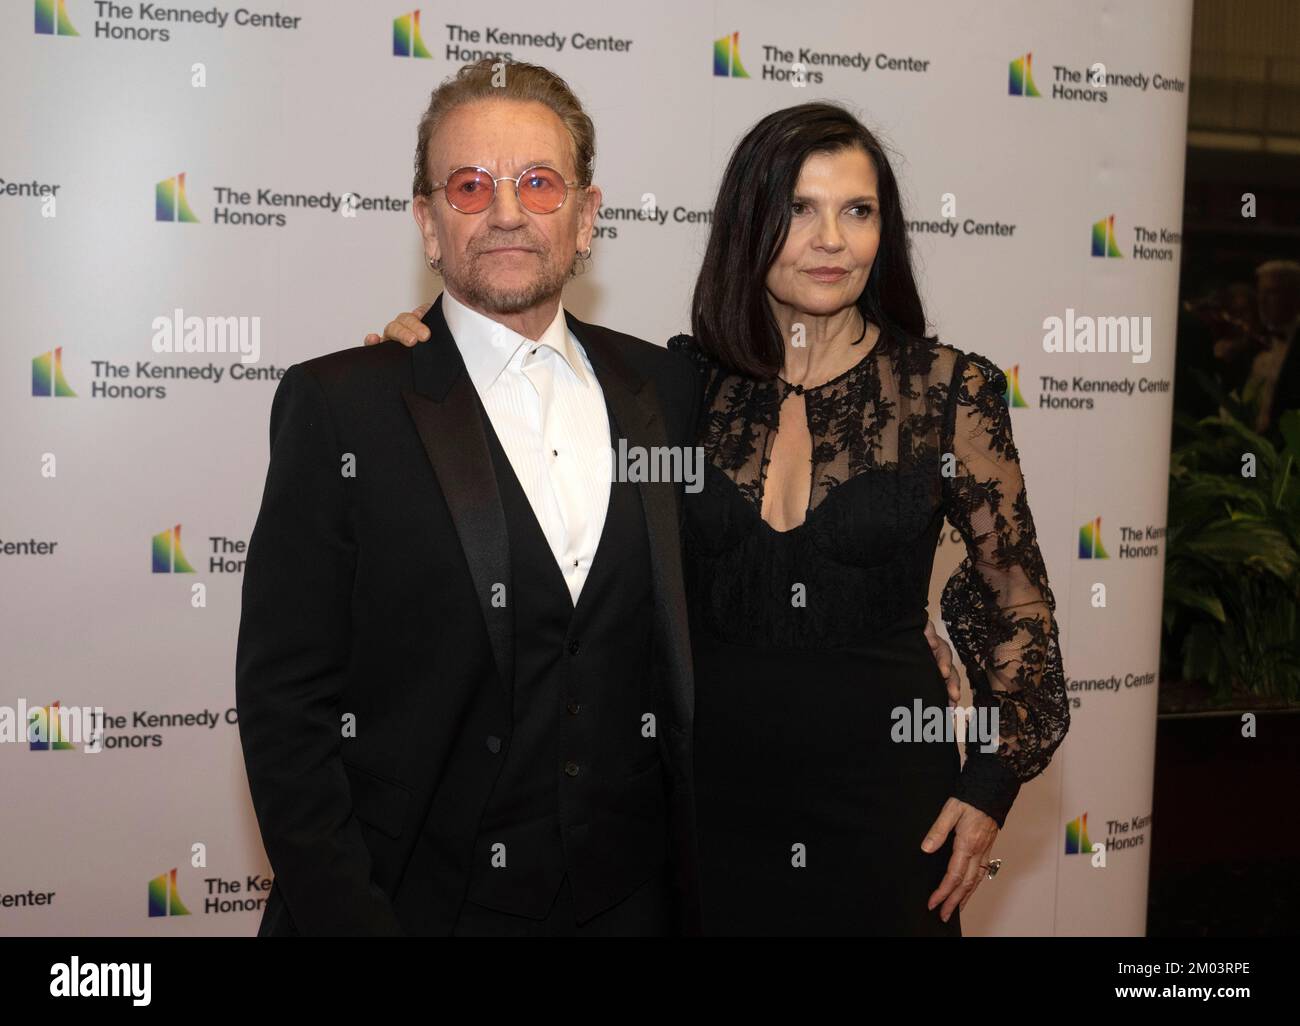 U2's Bono and wife Ali Hewson to star in Louis Vuitton 'Core